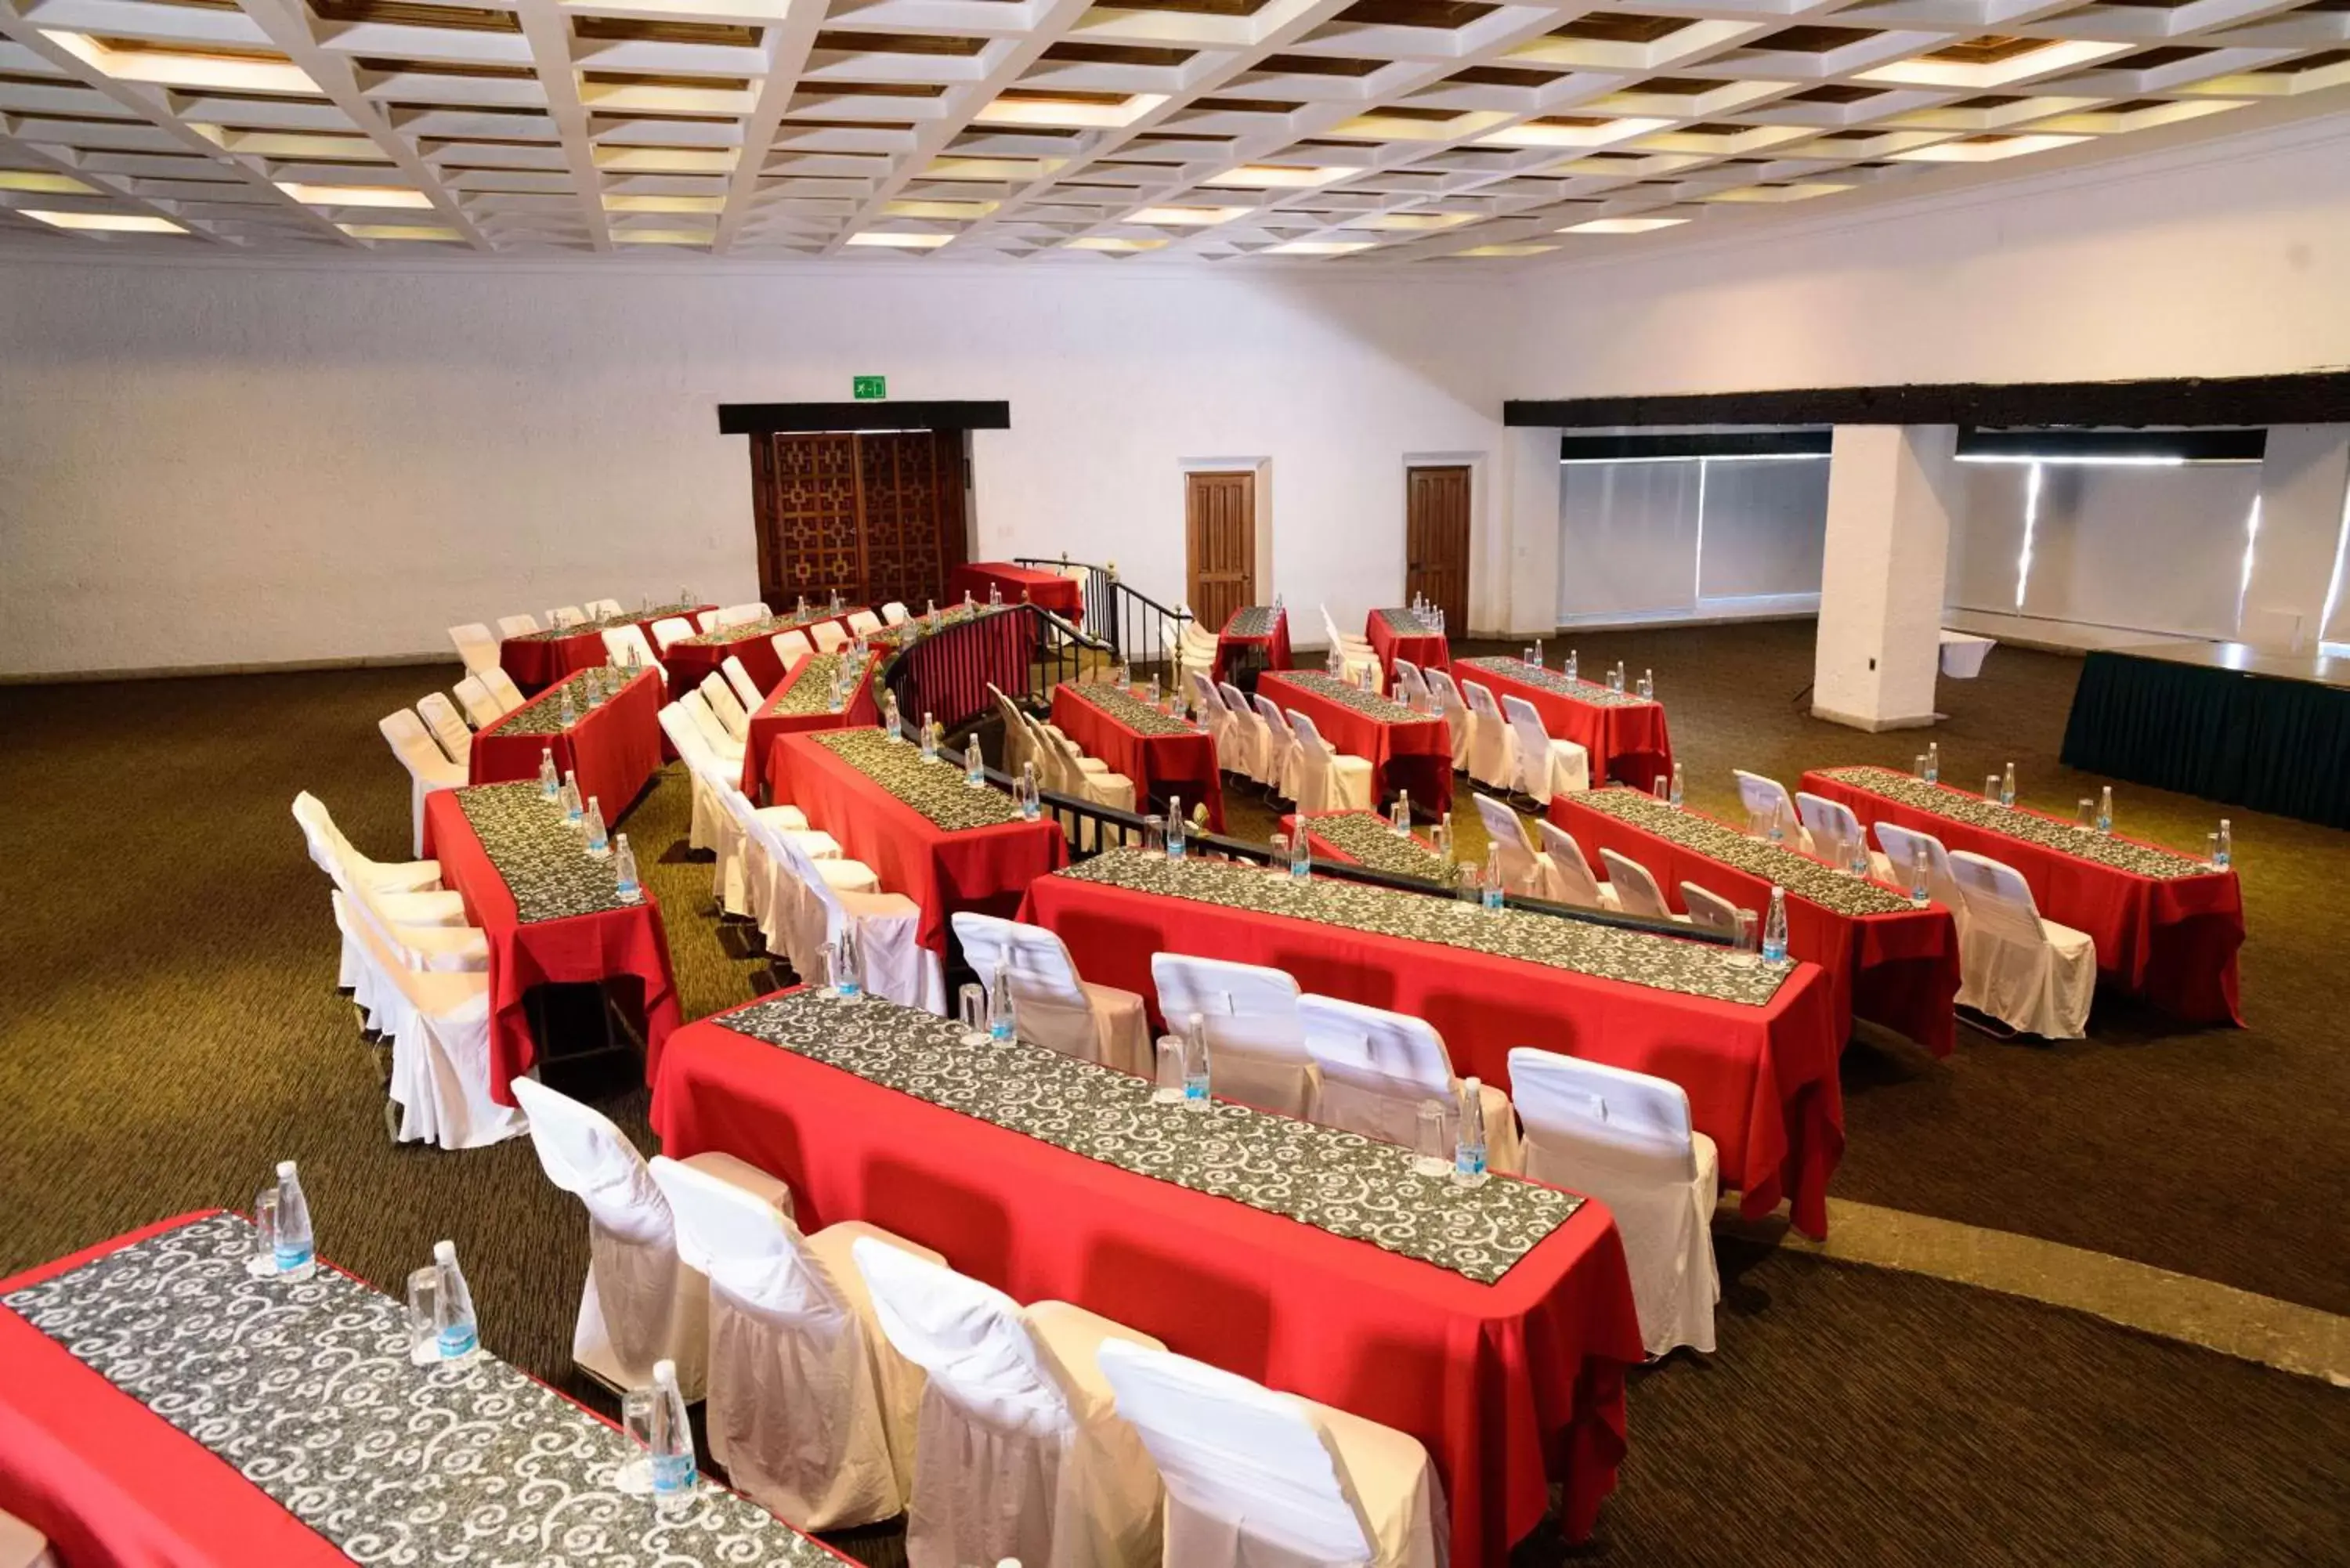 On site, Banquet Facilities in Radisson Hotel Tapatio Guadalajara